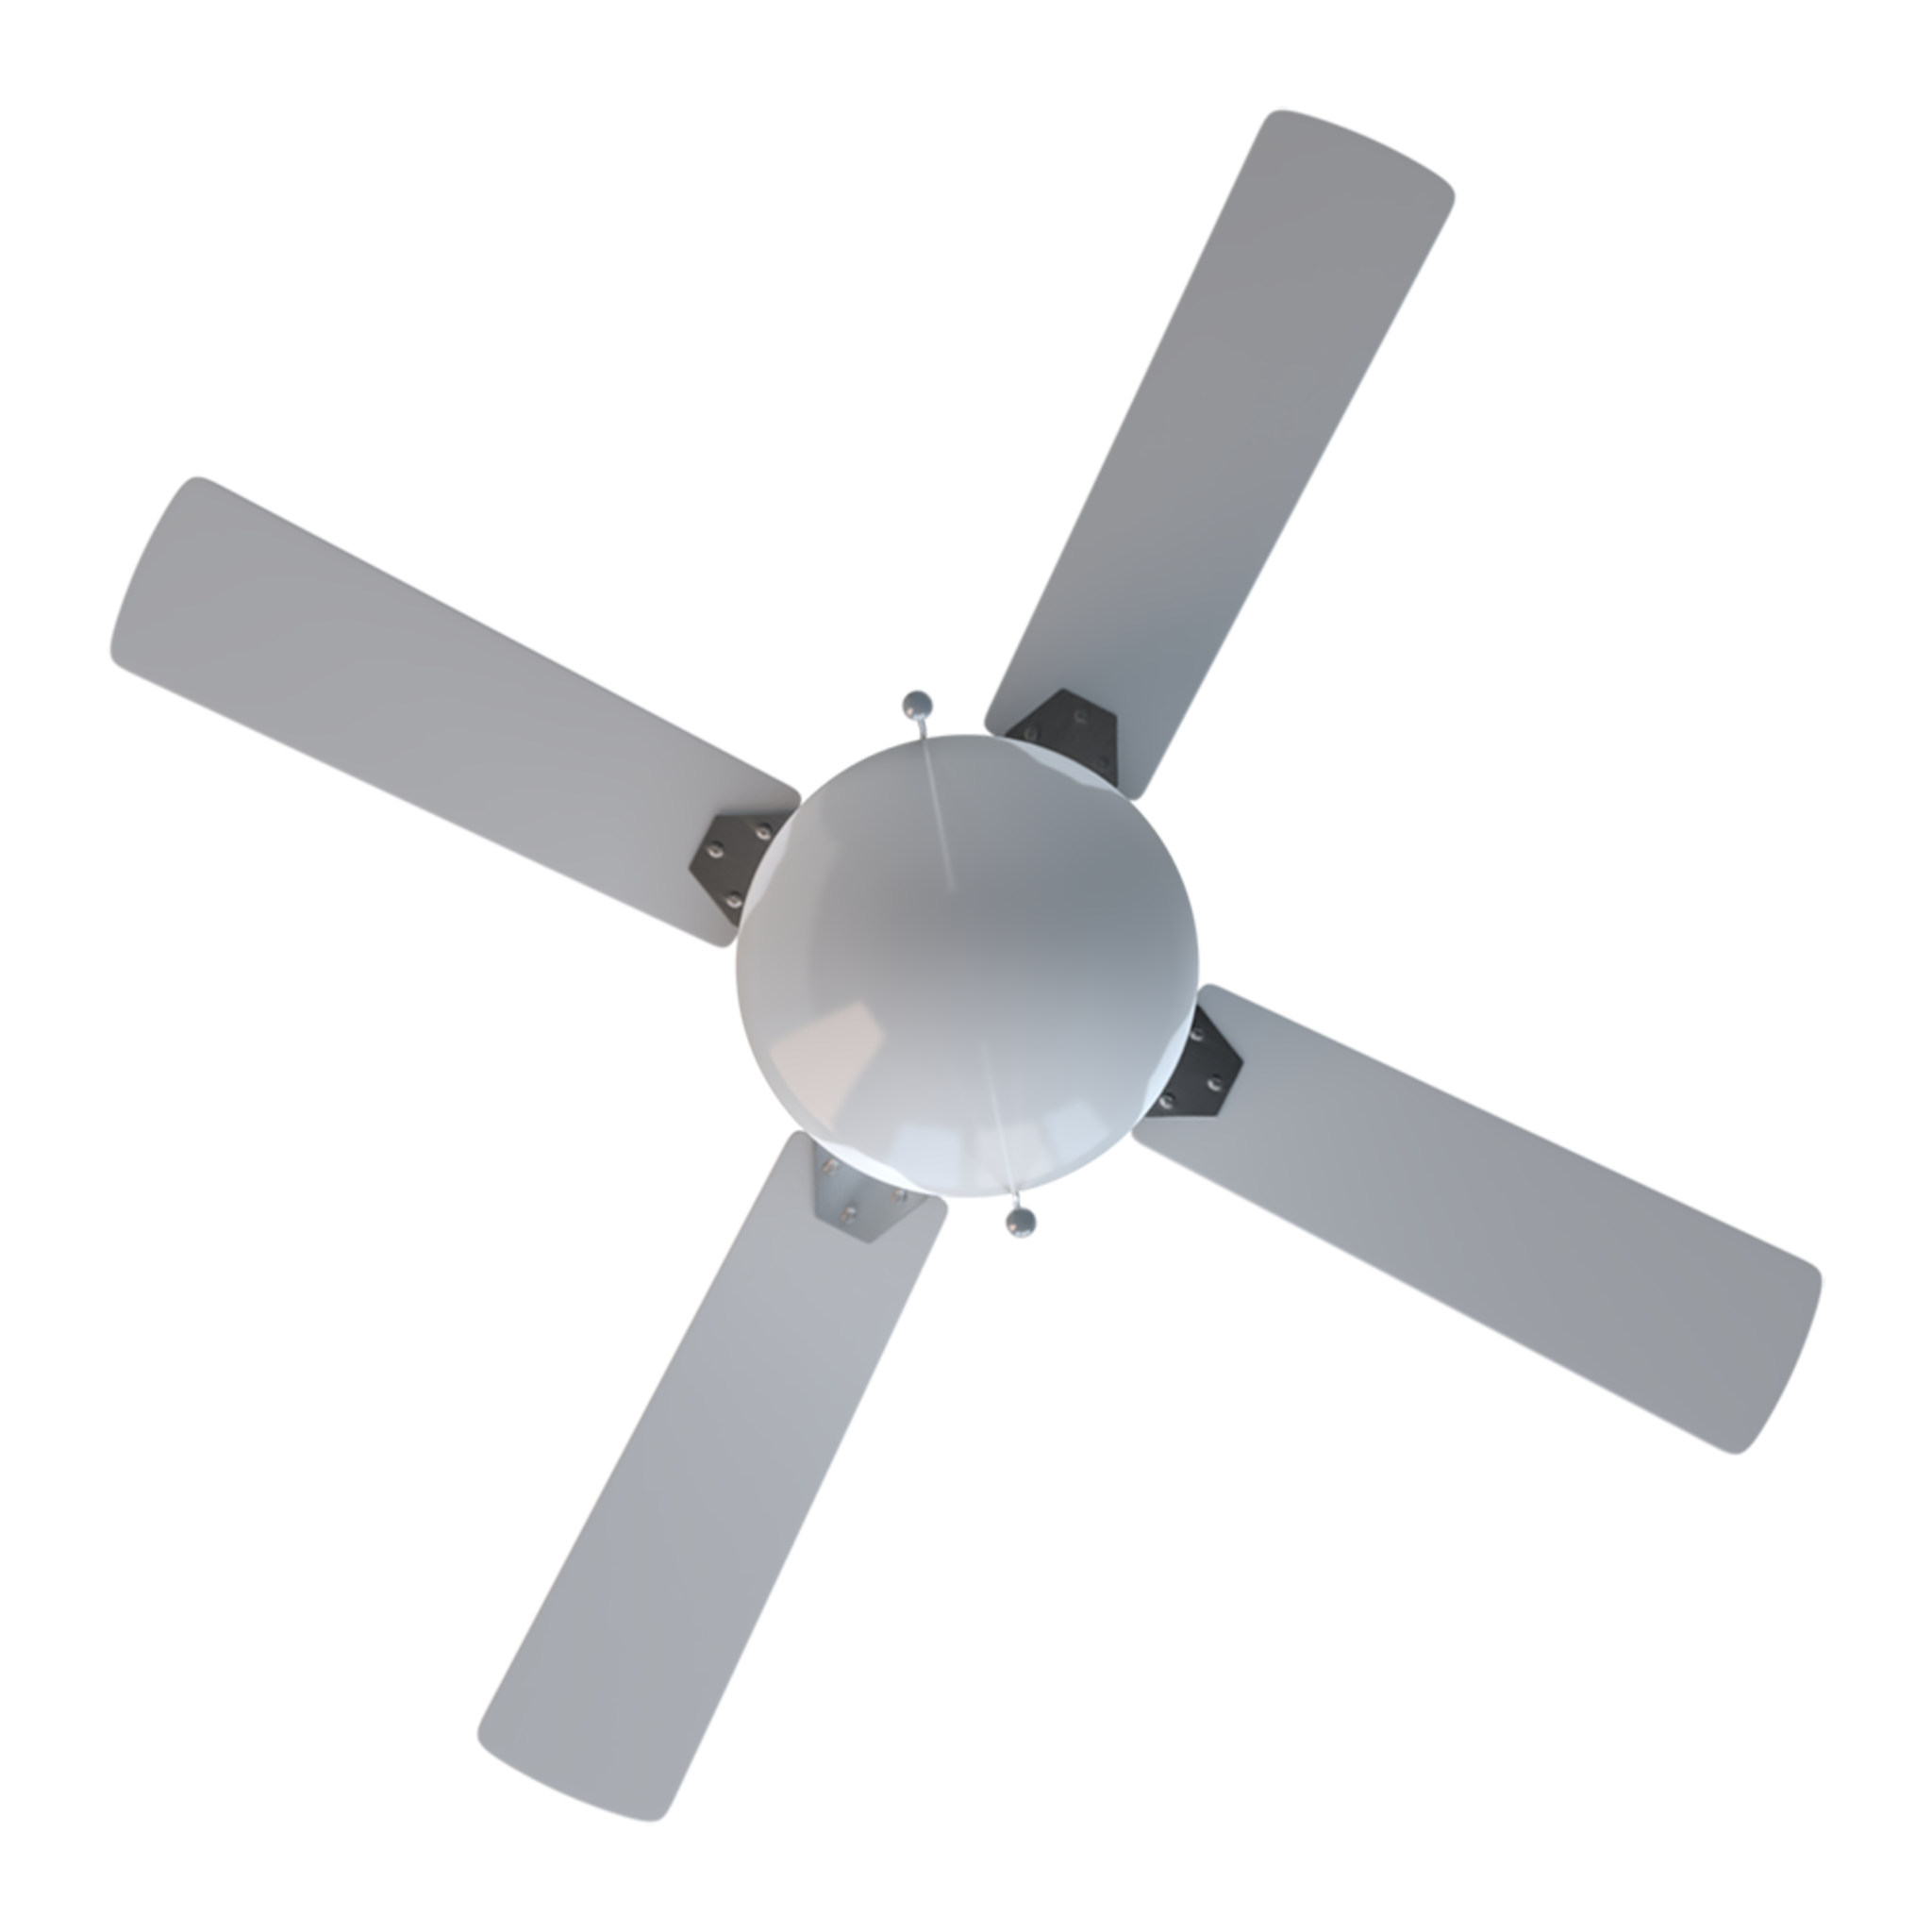 Ventilador de Techo EnergySilence Aero 450. 106 cm de Diámetro, Luz, 4 Aspas Reversibles, 3 Velocidades, Función Invierno, 50W